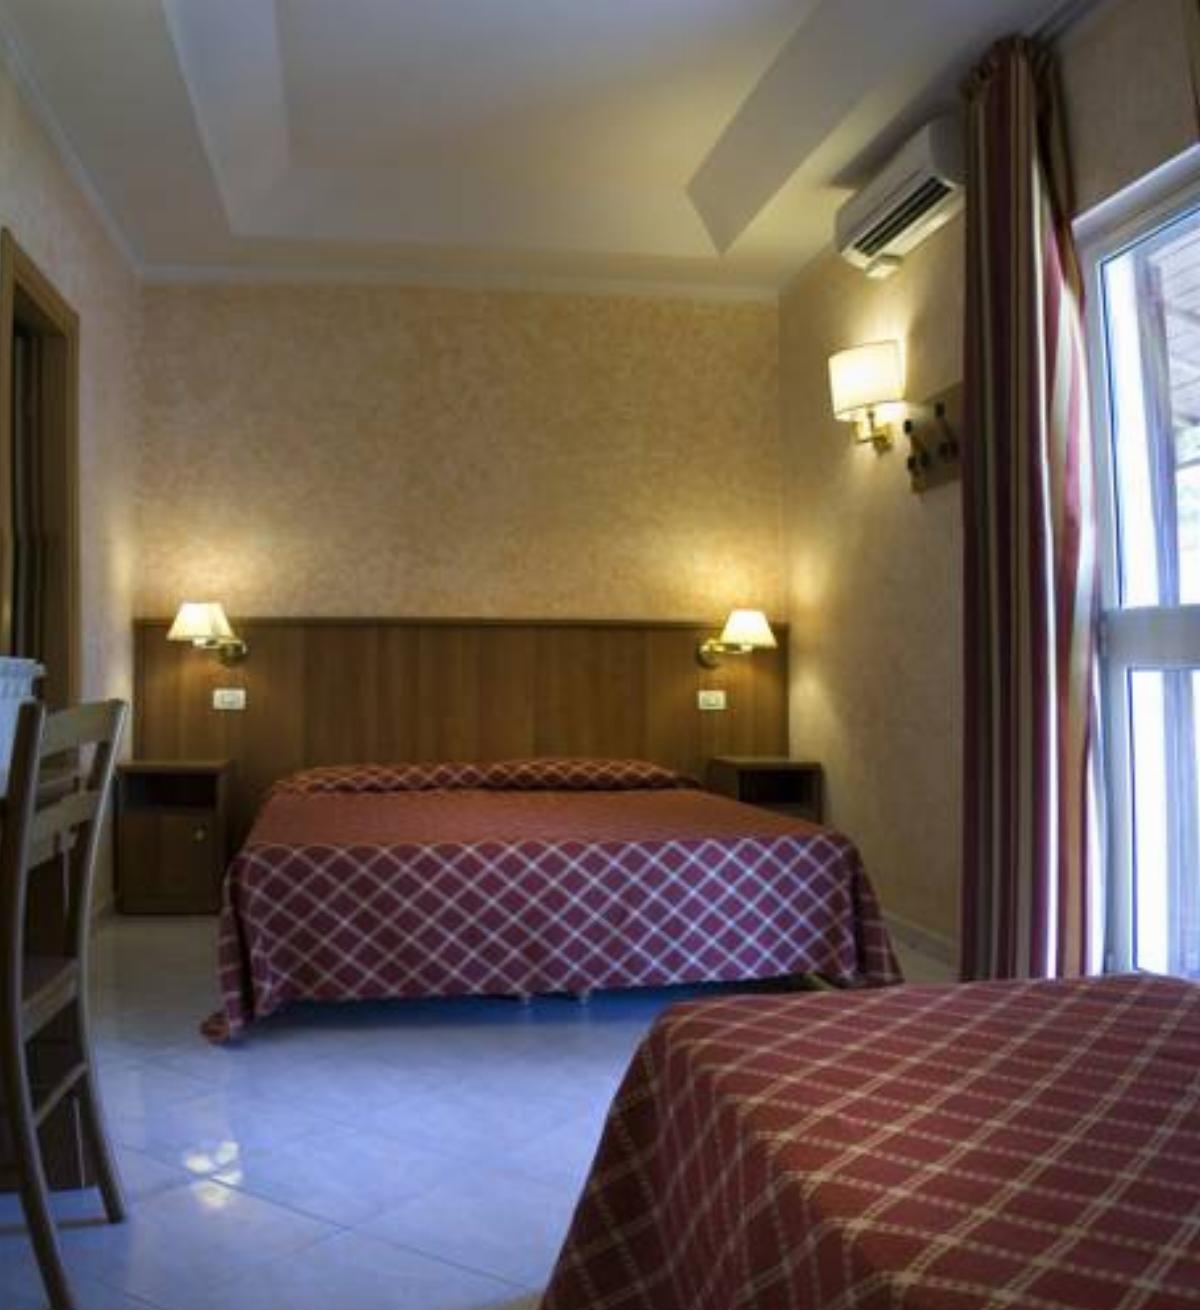 Motel Salaria Hotel Castel Giubileo Italy